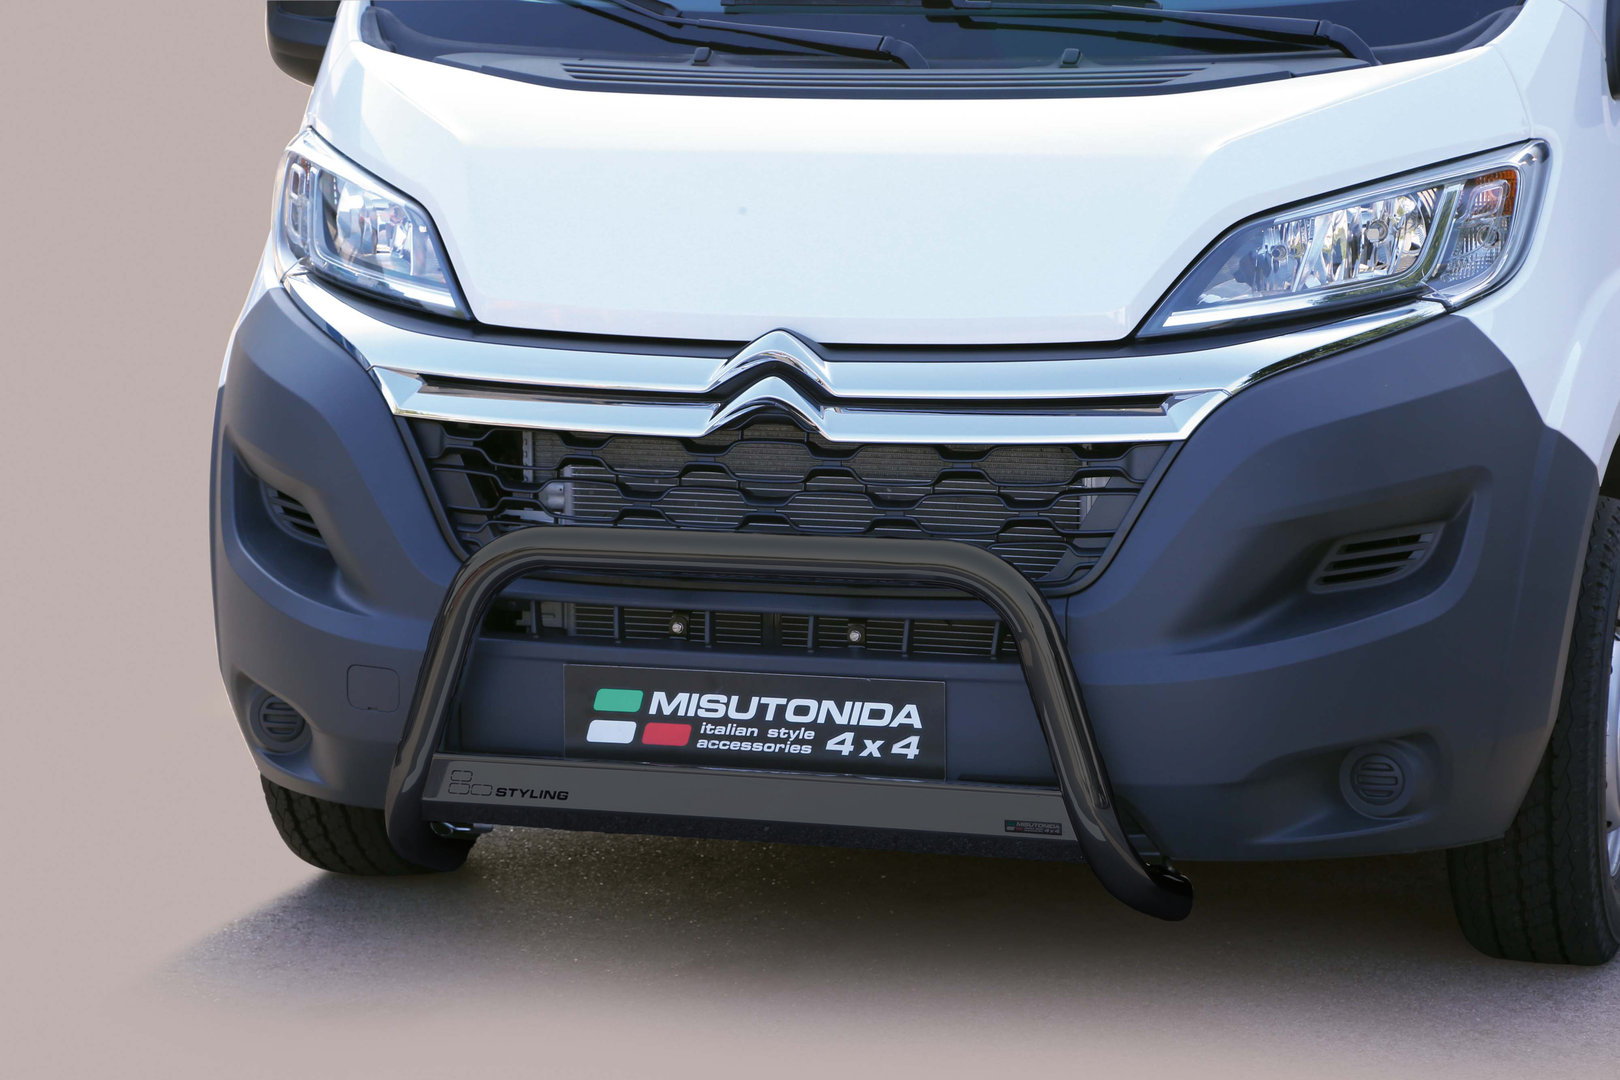 Peugeot Boxer Musta EU-Valorauta 2014-> (Misutonida)